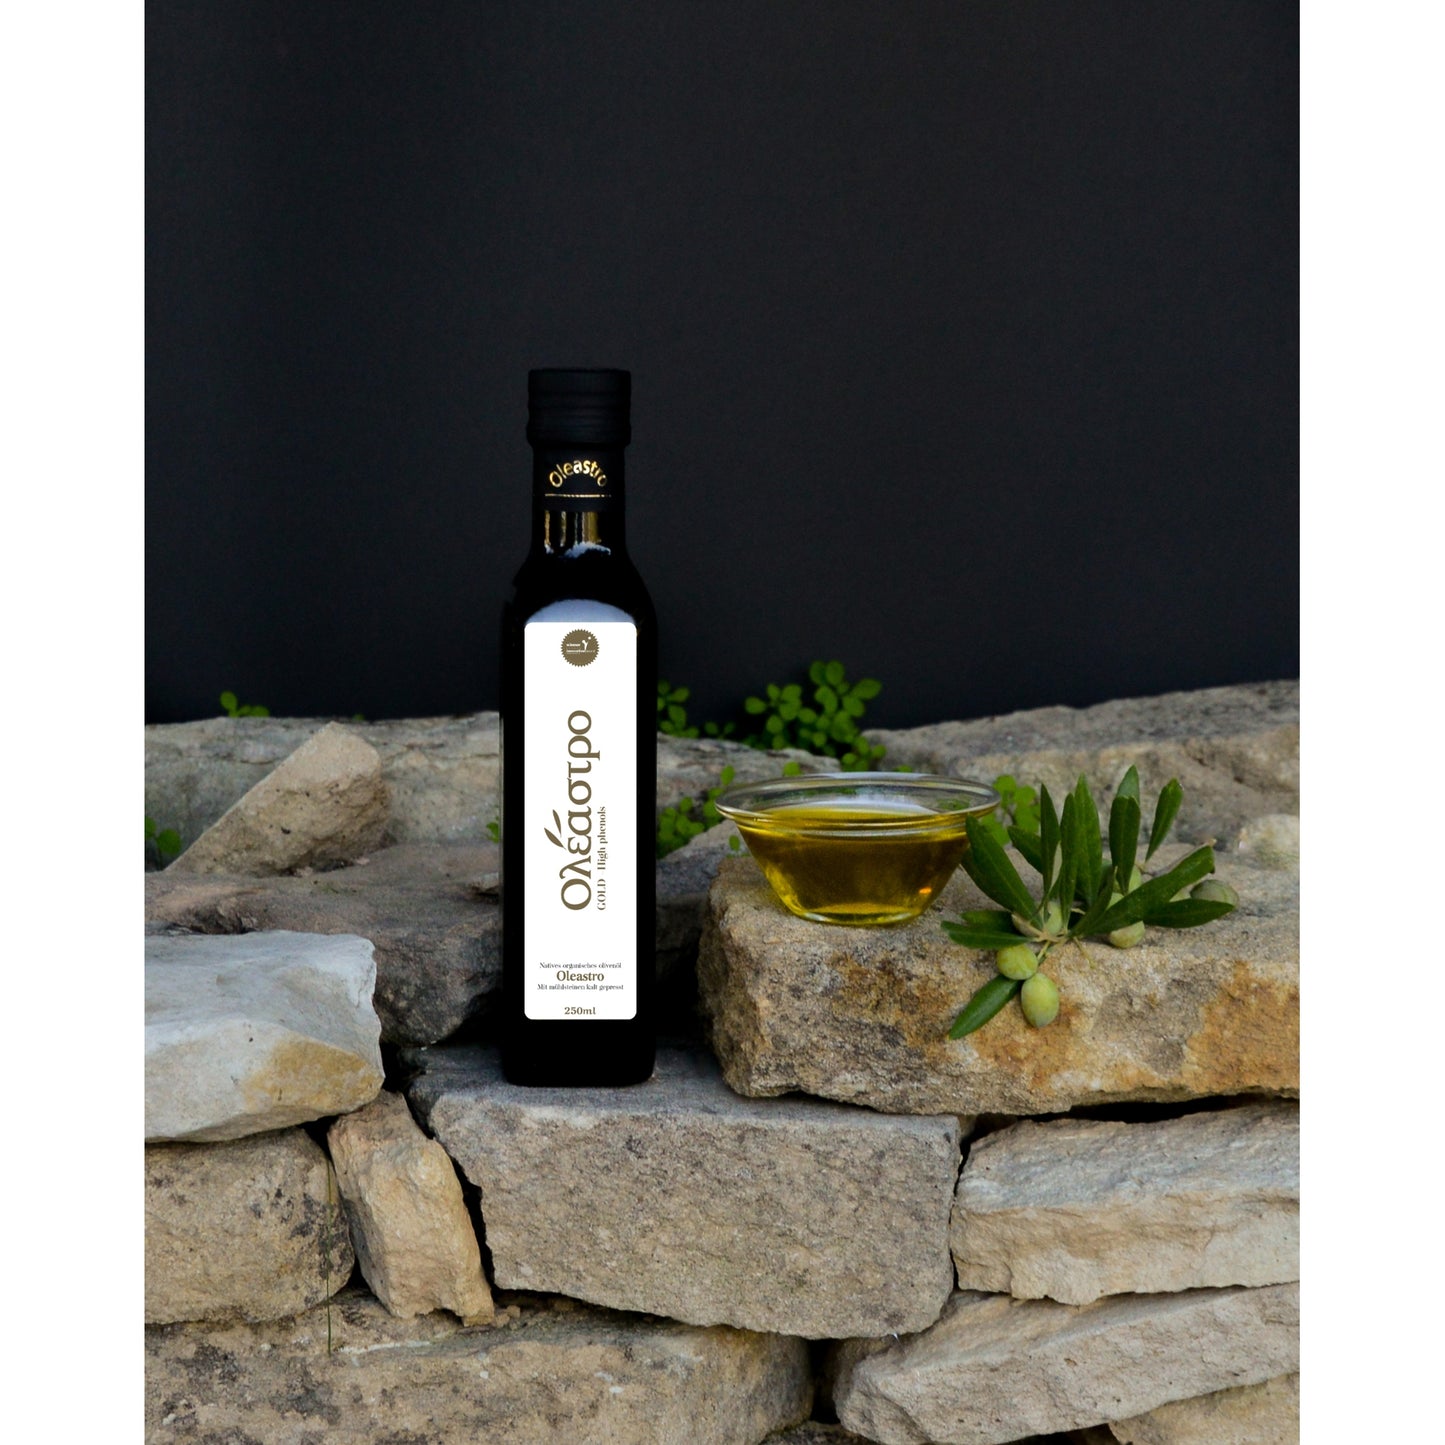 Highest polyphenol olive oil - 250ML Koroneiki Organic Olive Oil by Oleastro olive park (Cyprus)